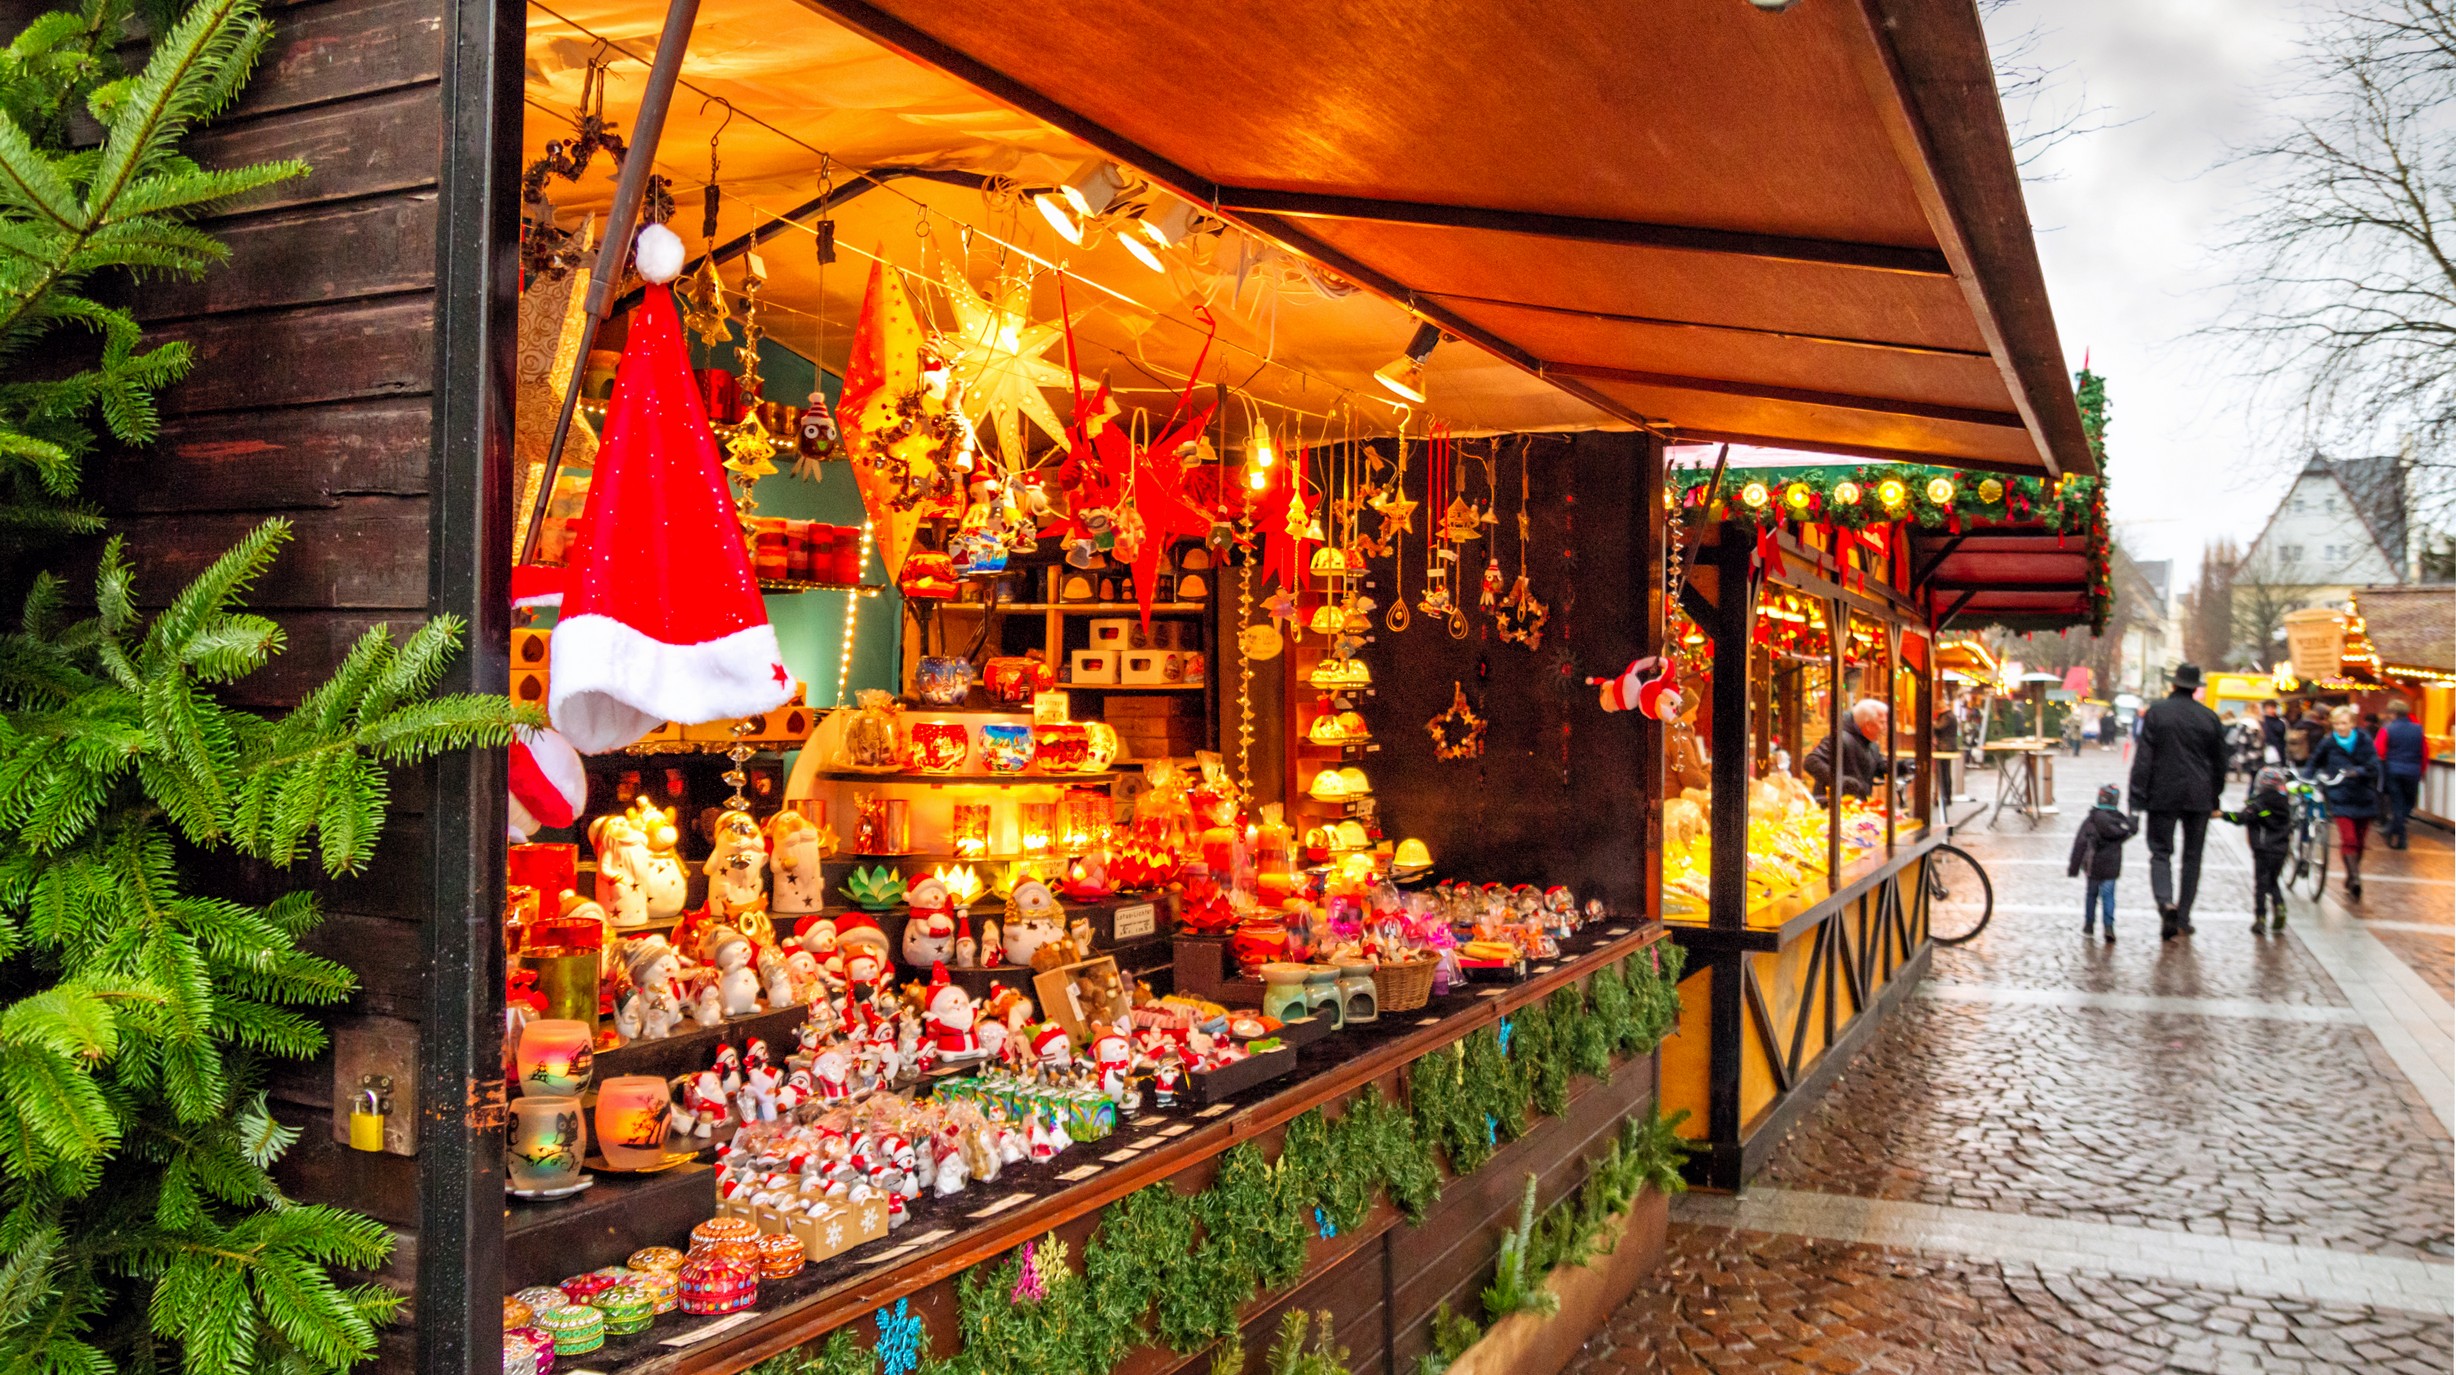 Kerstmarkt in Bonn centrum